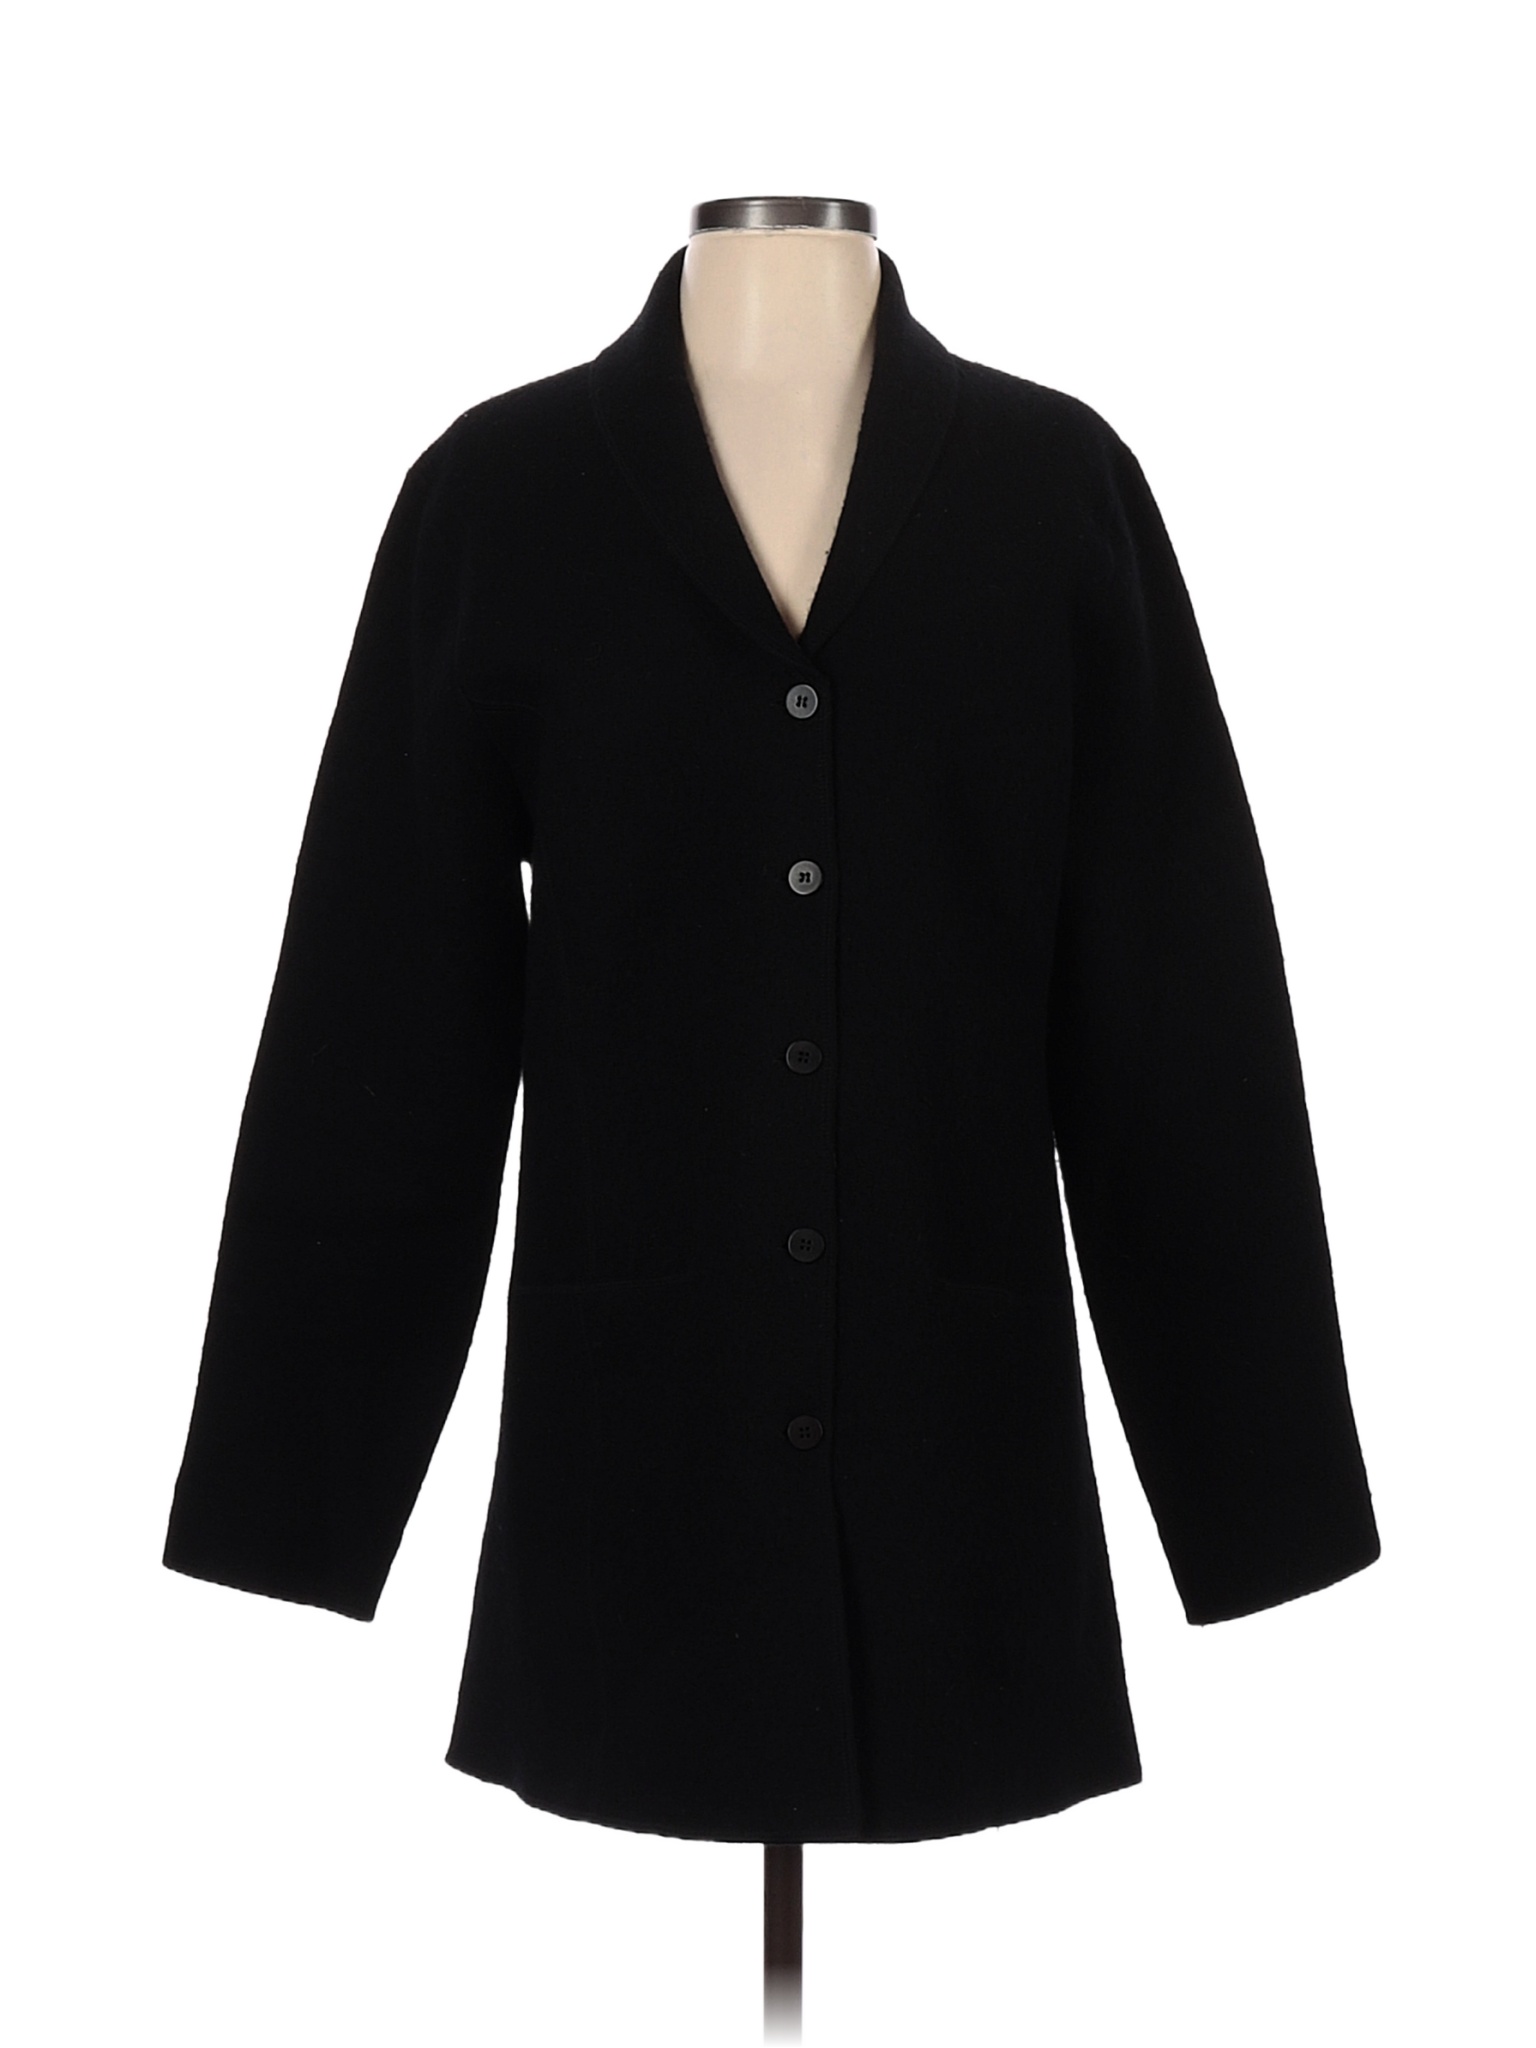 Eileen Fisher 100% Wool Solid Black Wool Coat Size S - 79% off | thredUP